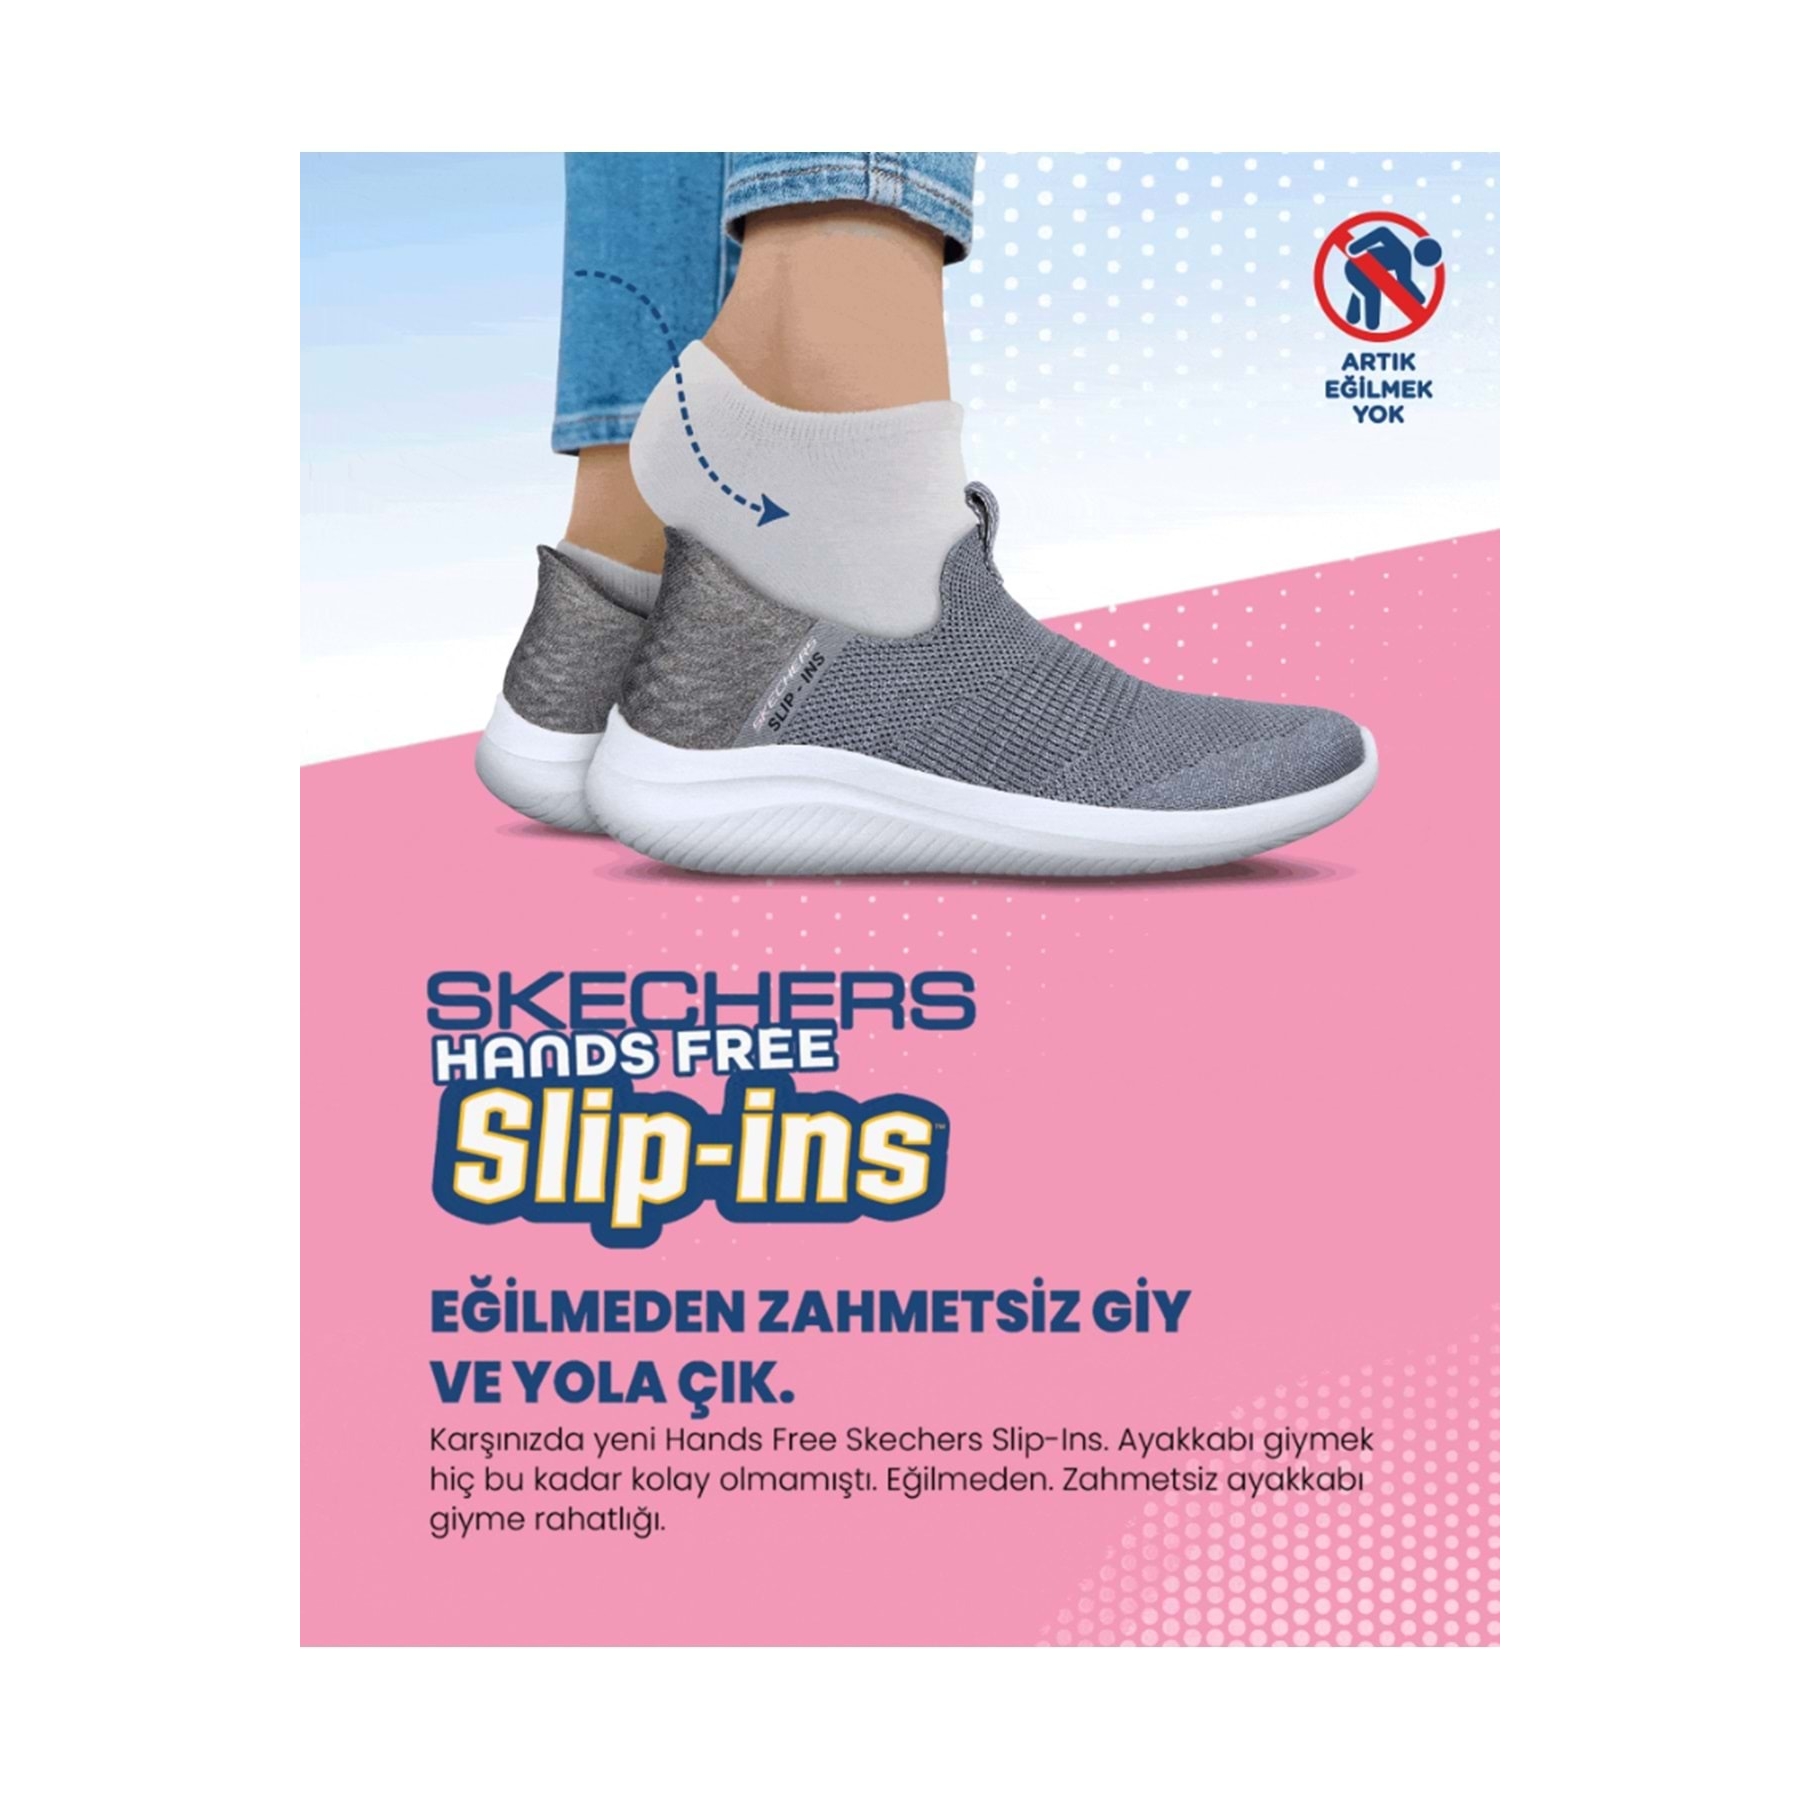 Skechers Go Walk Flex Erkek Gri Spor Ayakkabı (216491TK DKGY)